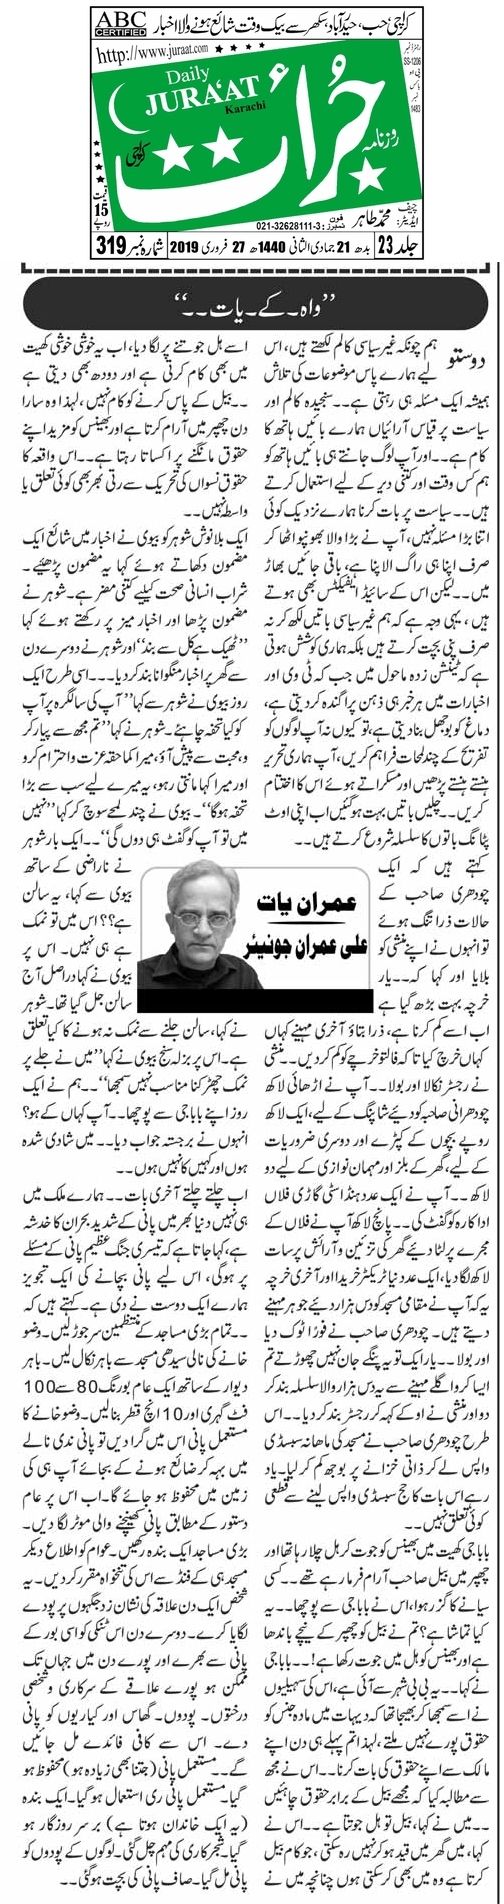 Waqiyat By Ali Imran Junior Imran Yaat Daily Jurrat